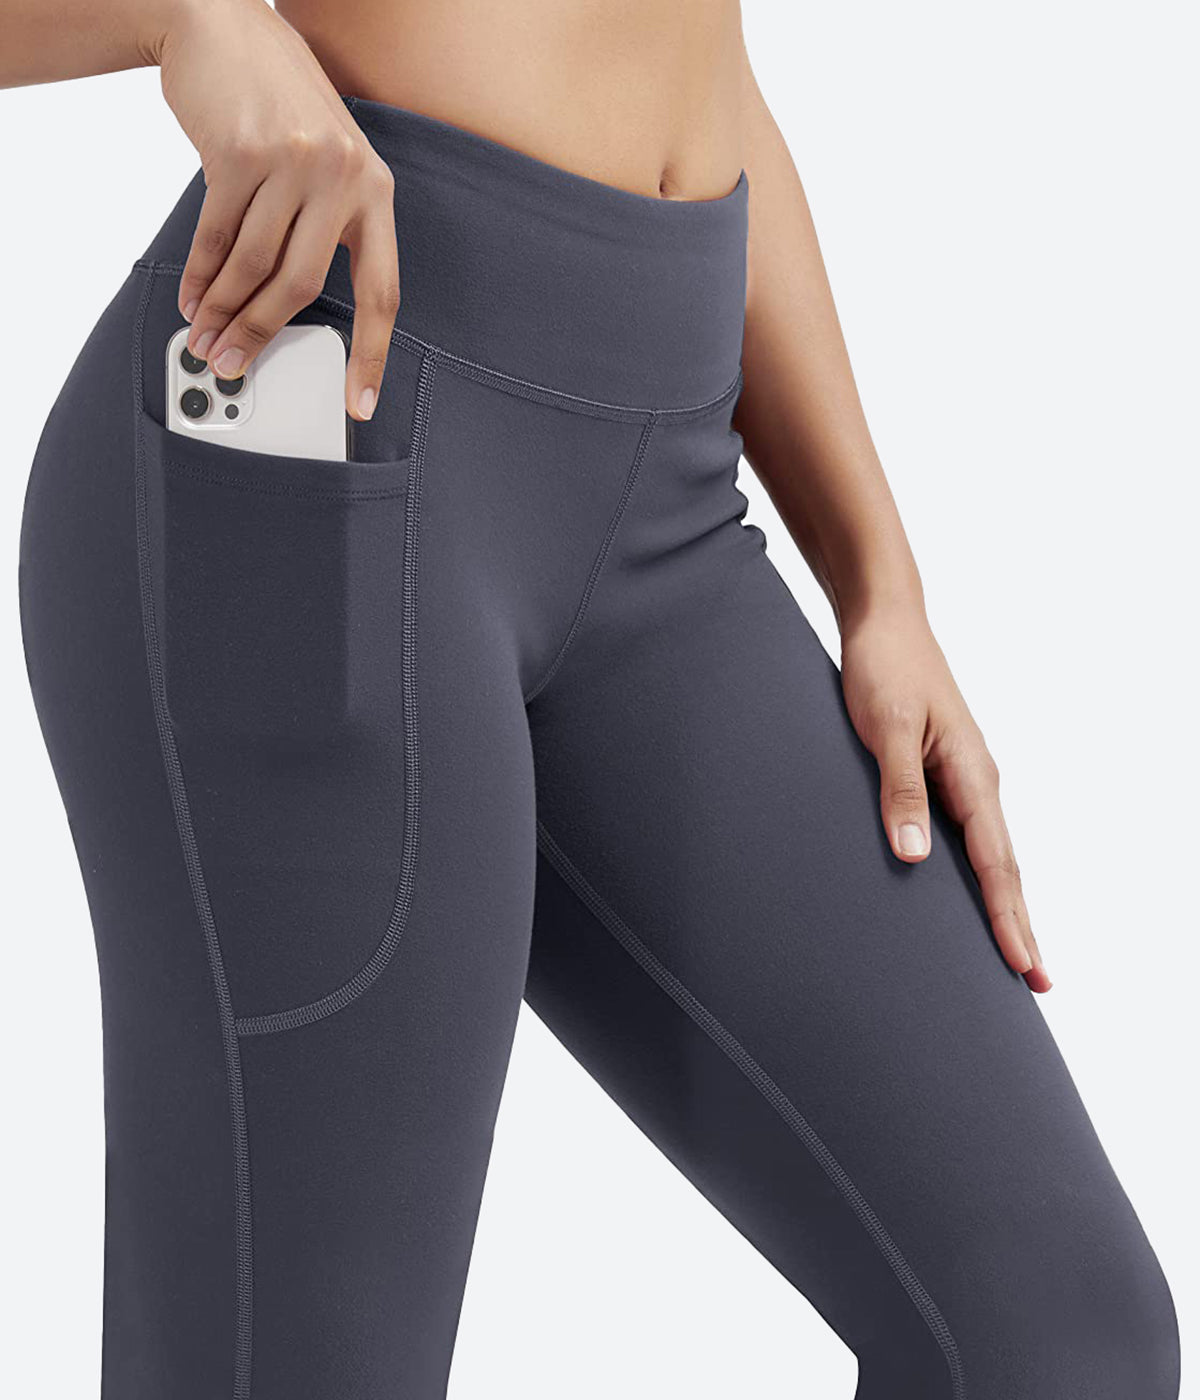  GILIGEGE Women's Capri Yoga Pants with Pockets High